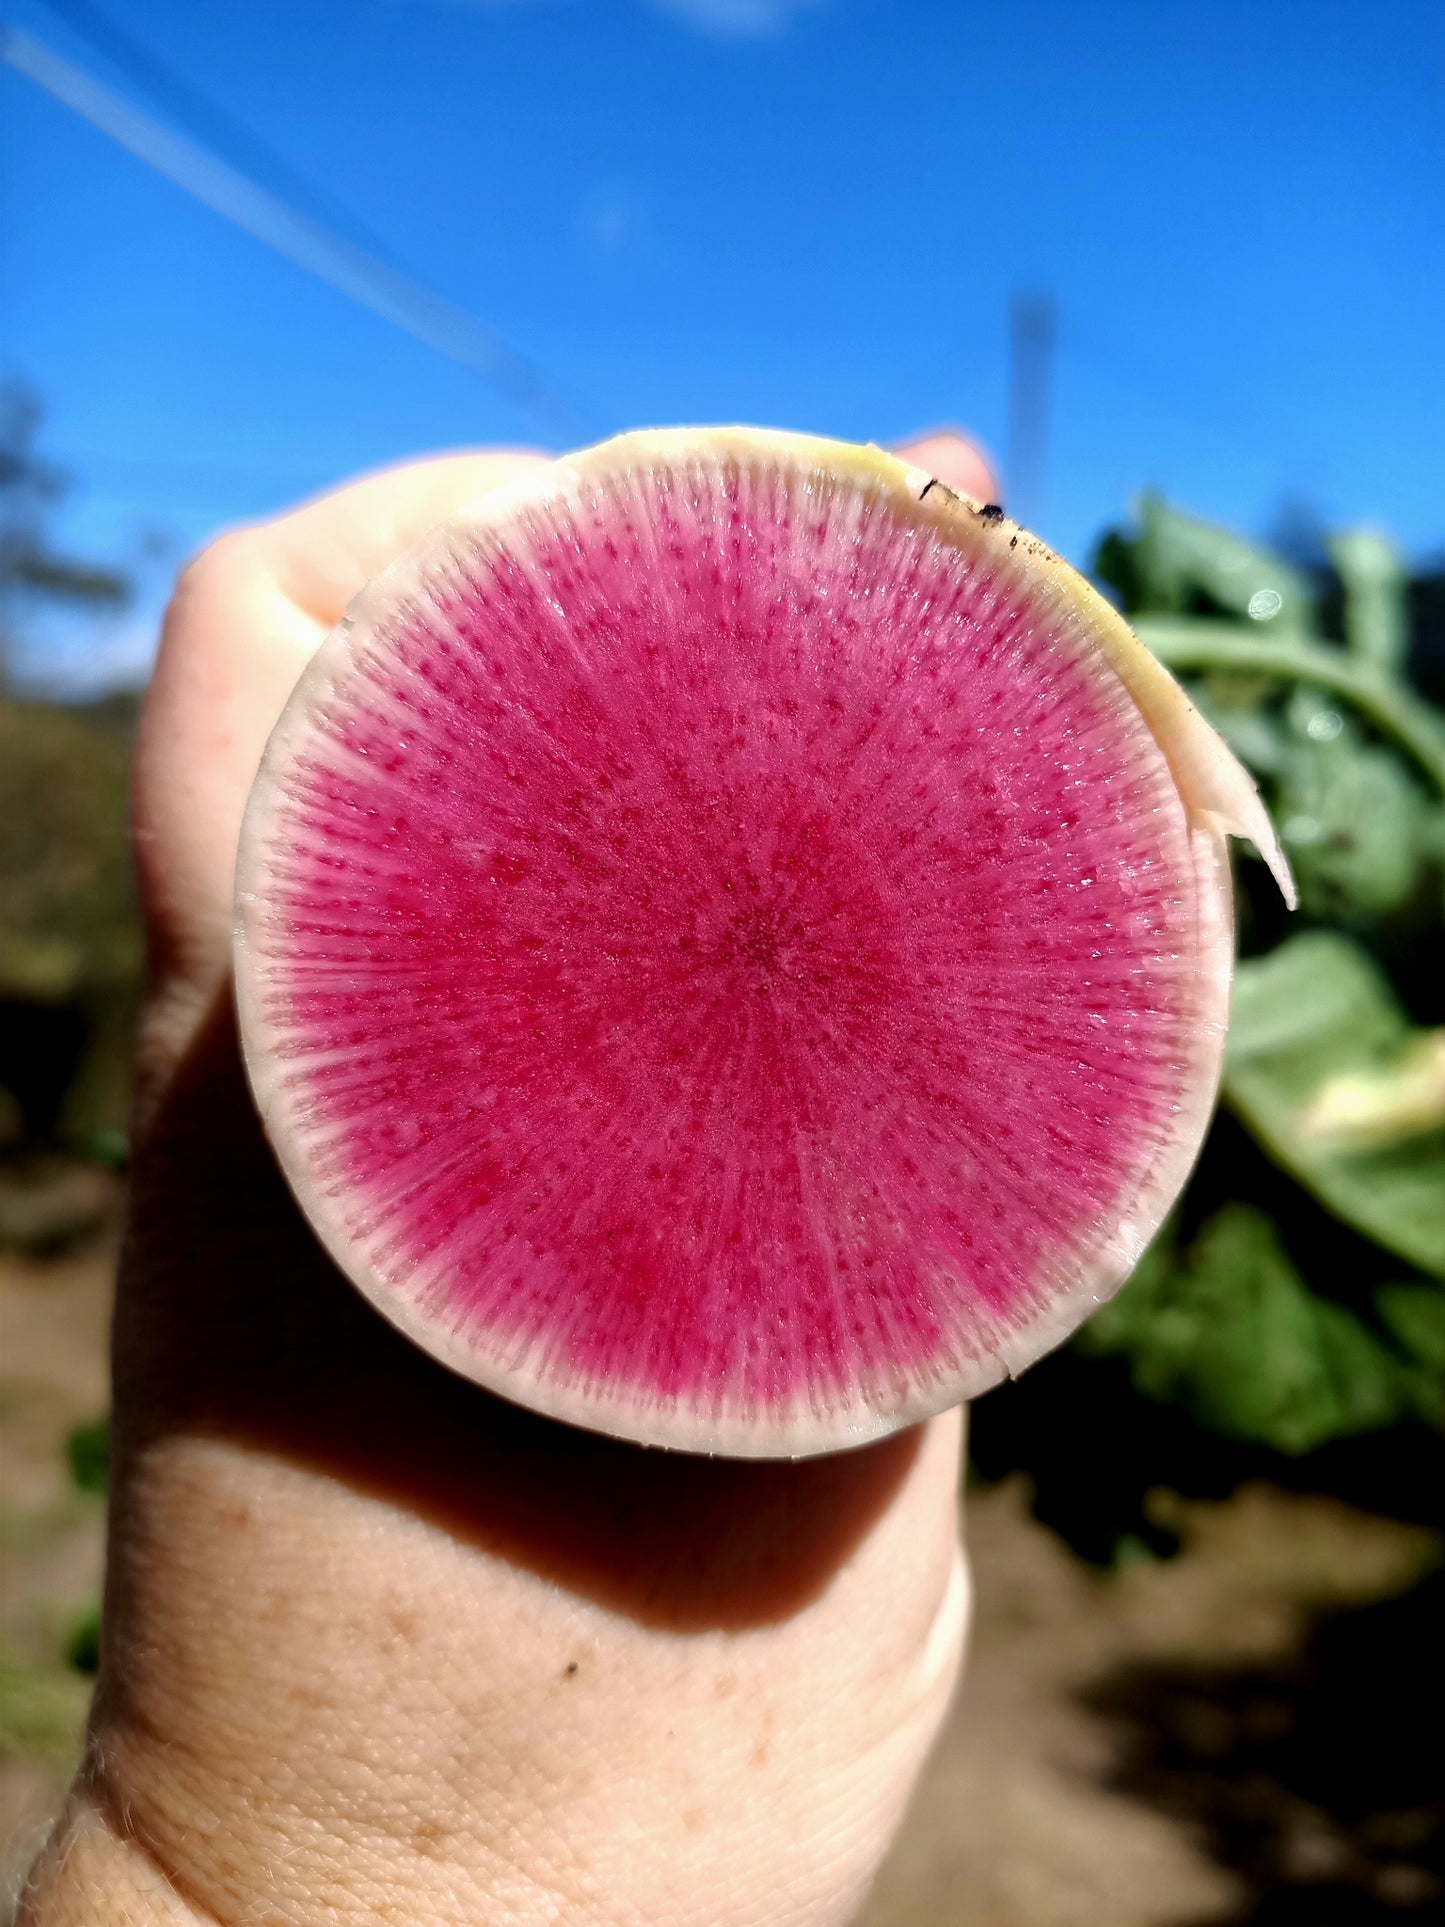 Watermelon radish Australia 